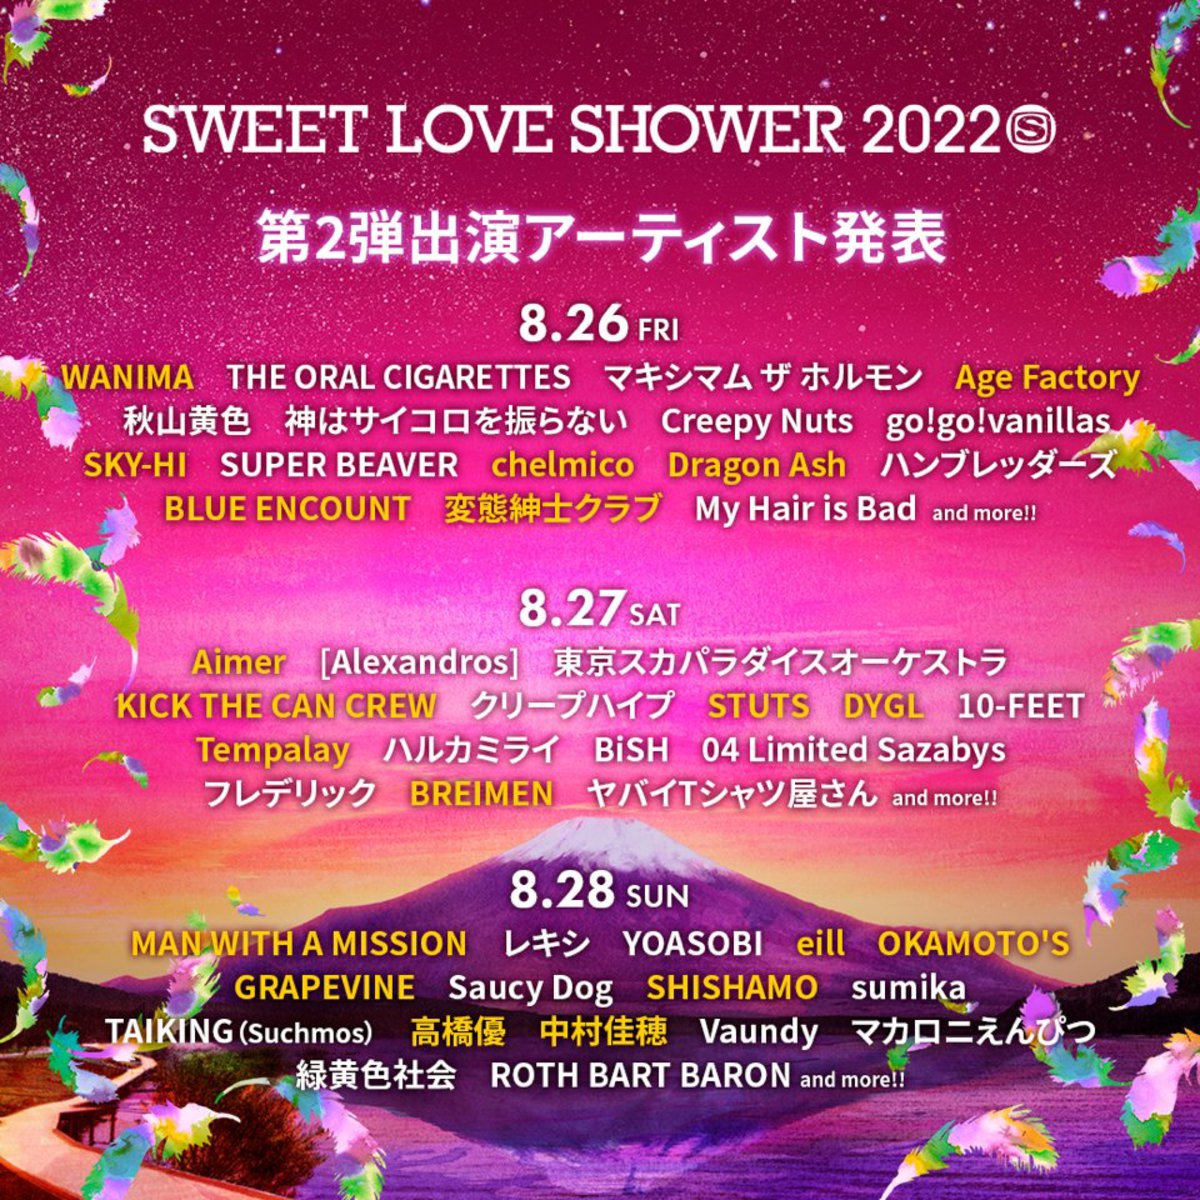 Sweet Love Shower 22 第2弾出演アーティストでwanima マンウィズ Blue Encount Aimer Shishamo Eillら組発表